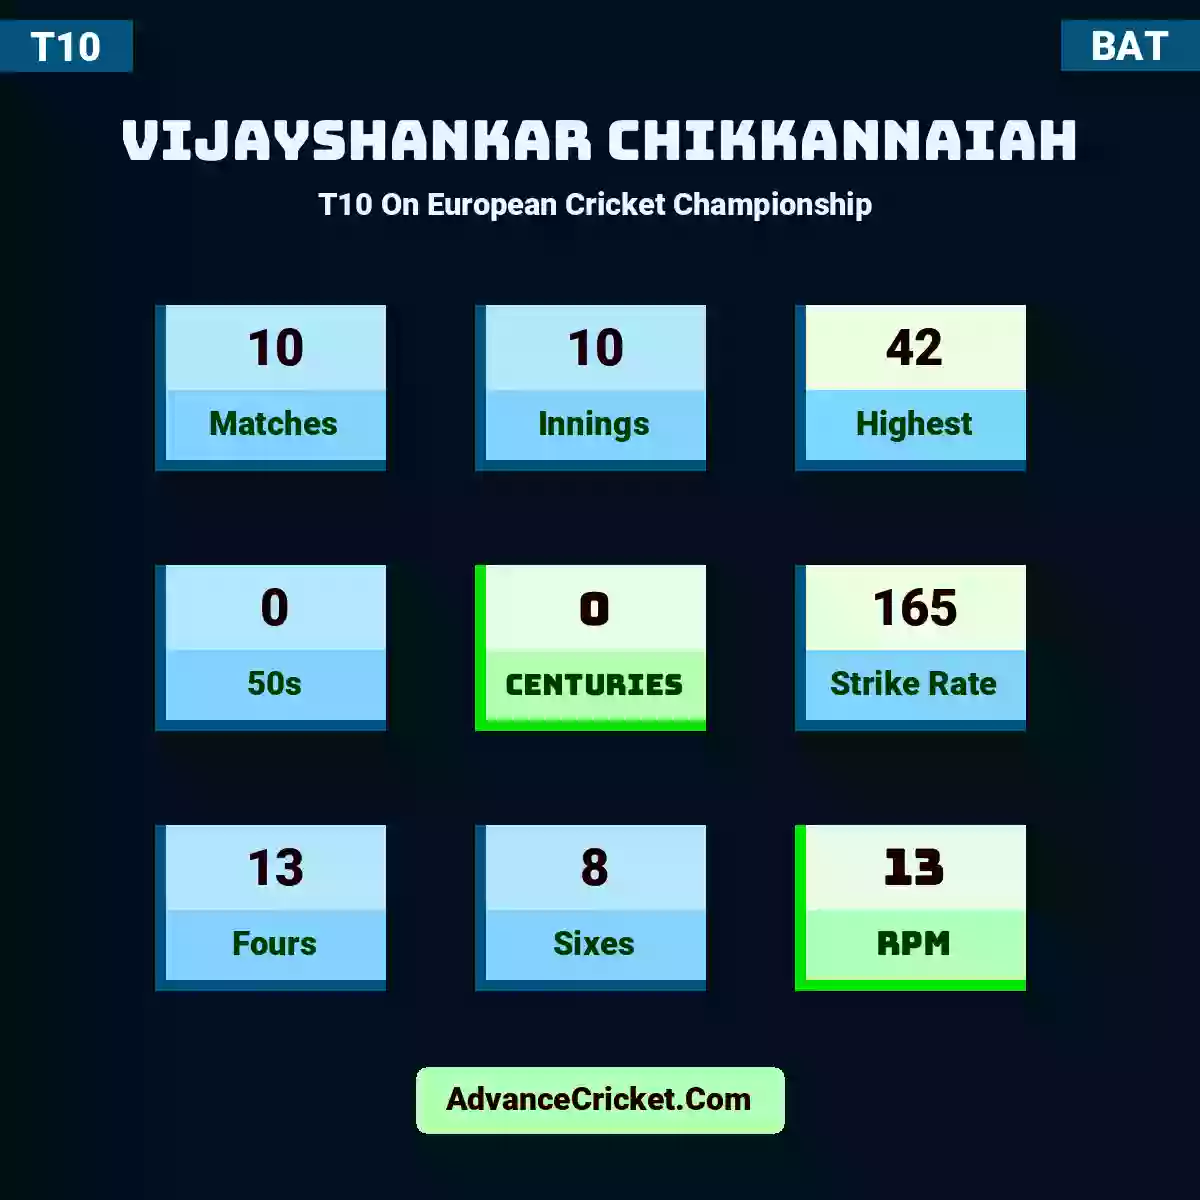 Vijayshankar Chikkannaiah T10  On European Cricket Championship , Vijayshankar Chikkannaiah played 10 matches, scored 42 runs as highest, 0 half-centuries, and 0 centuries, with a strike rate of 165. V.Chikkannaiah hit 13 fours and 8 sixes, with an RPM of 13.